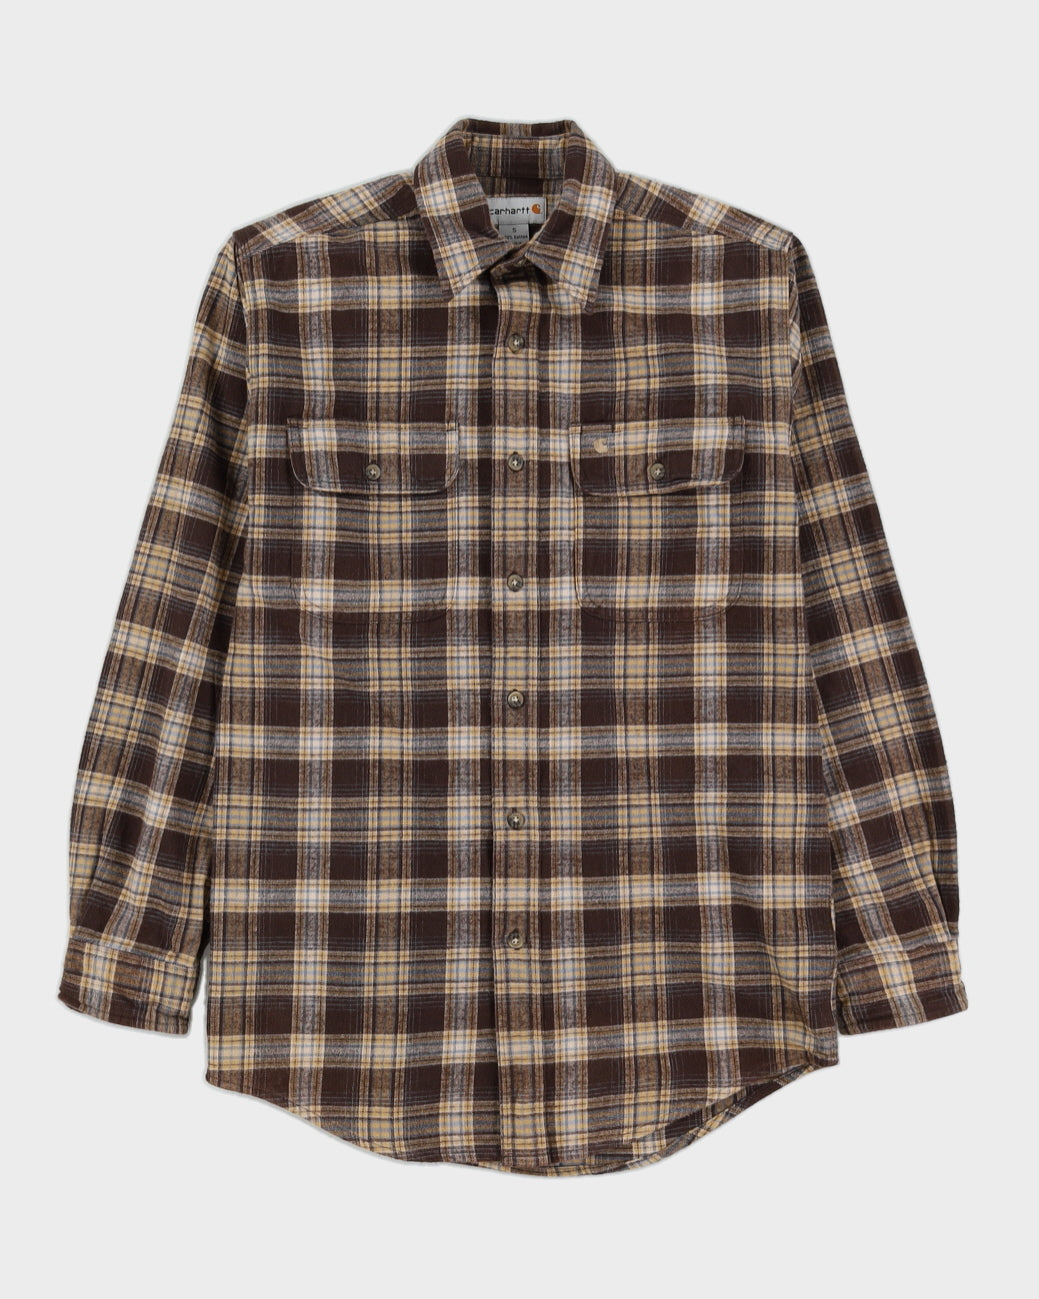 Carharrt Brown Checked Flannel Shirt - L